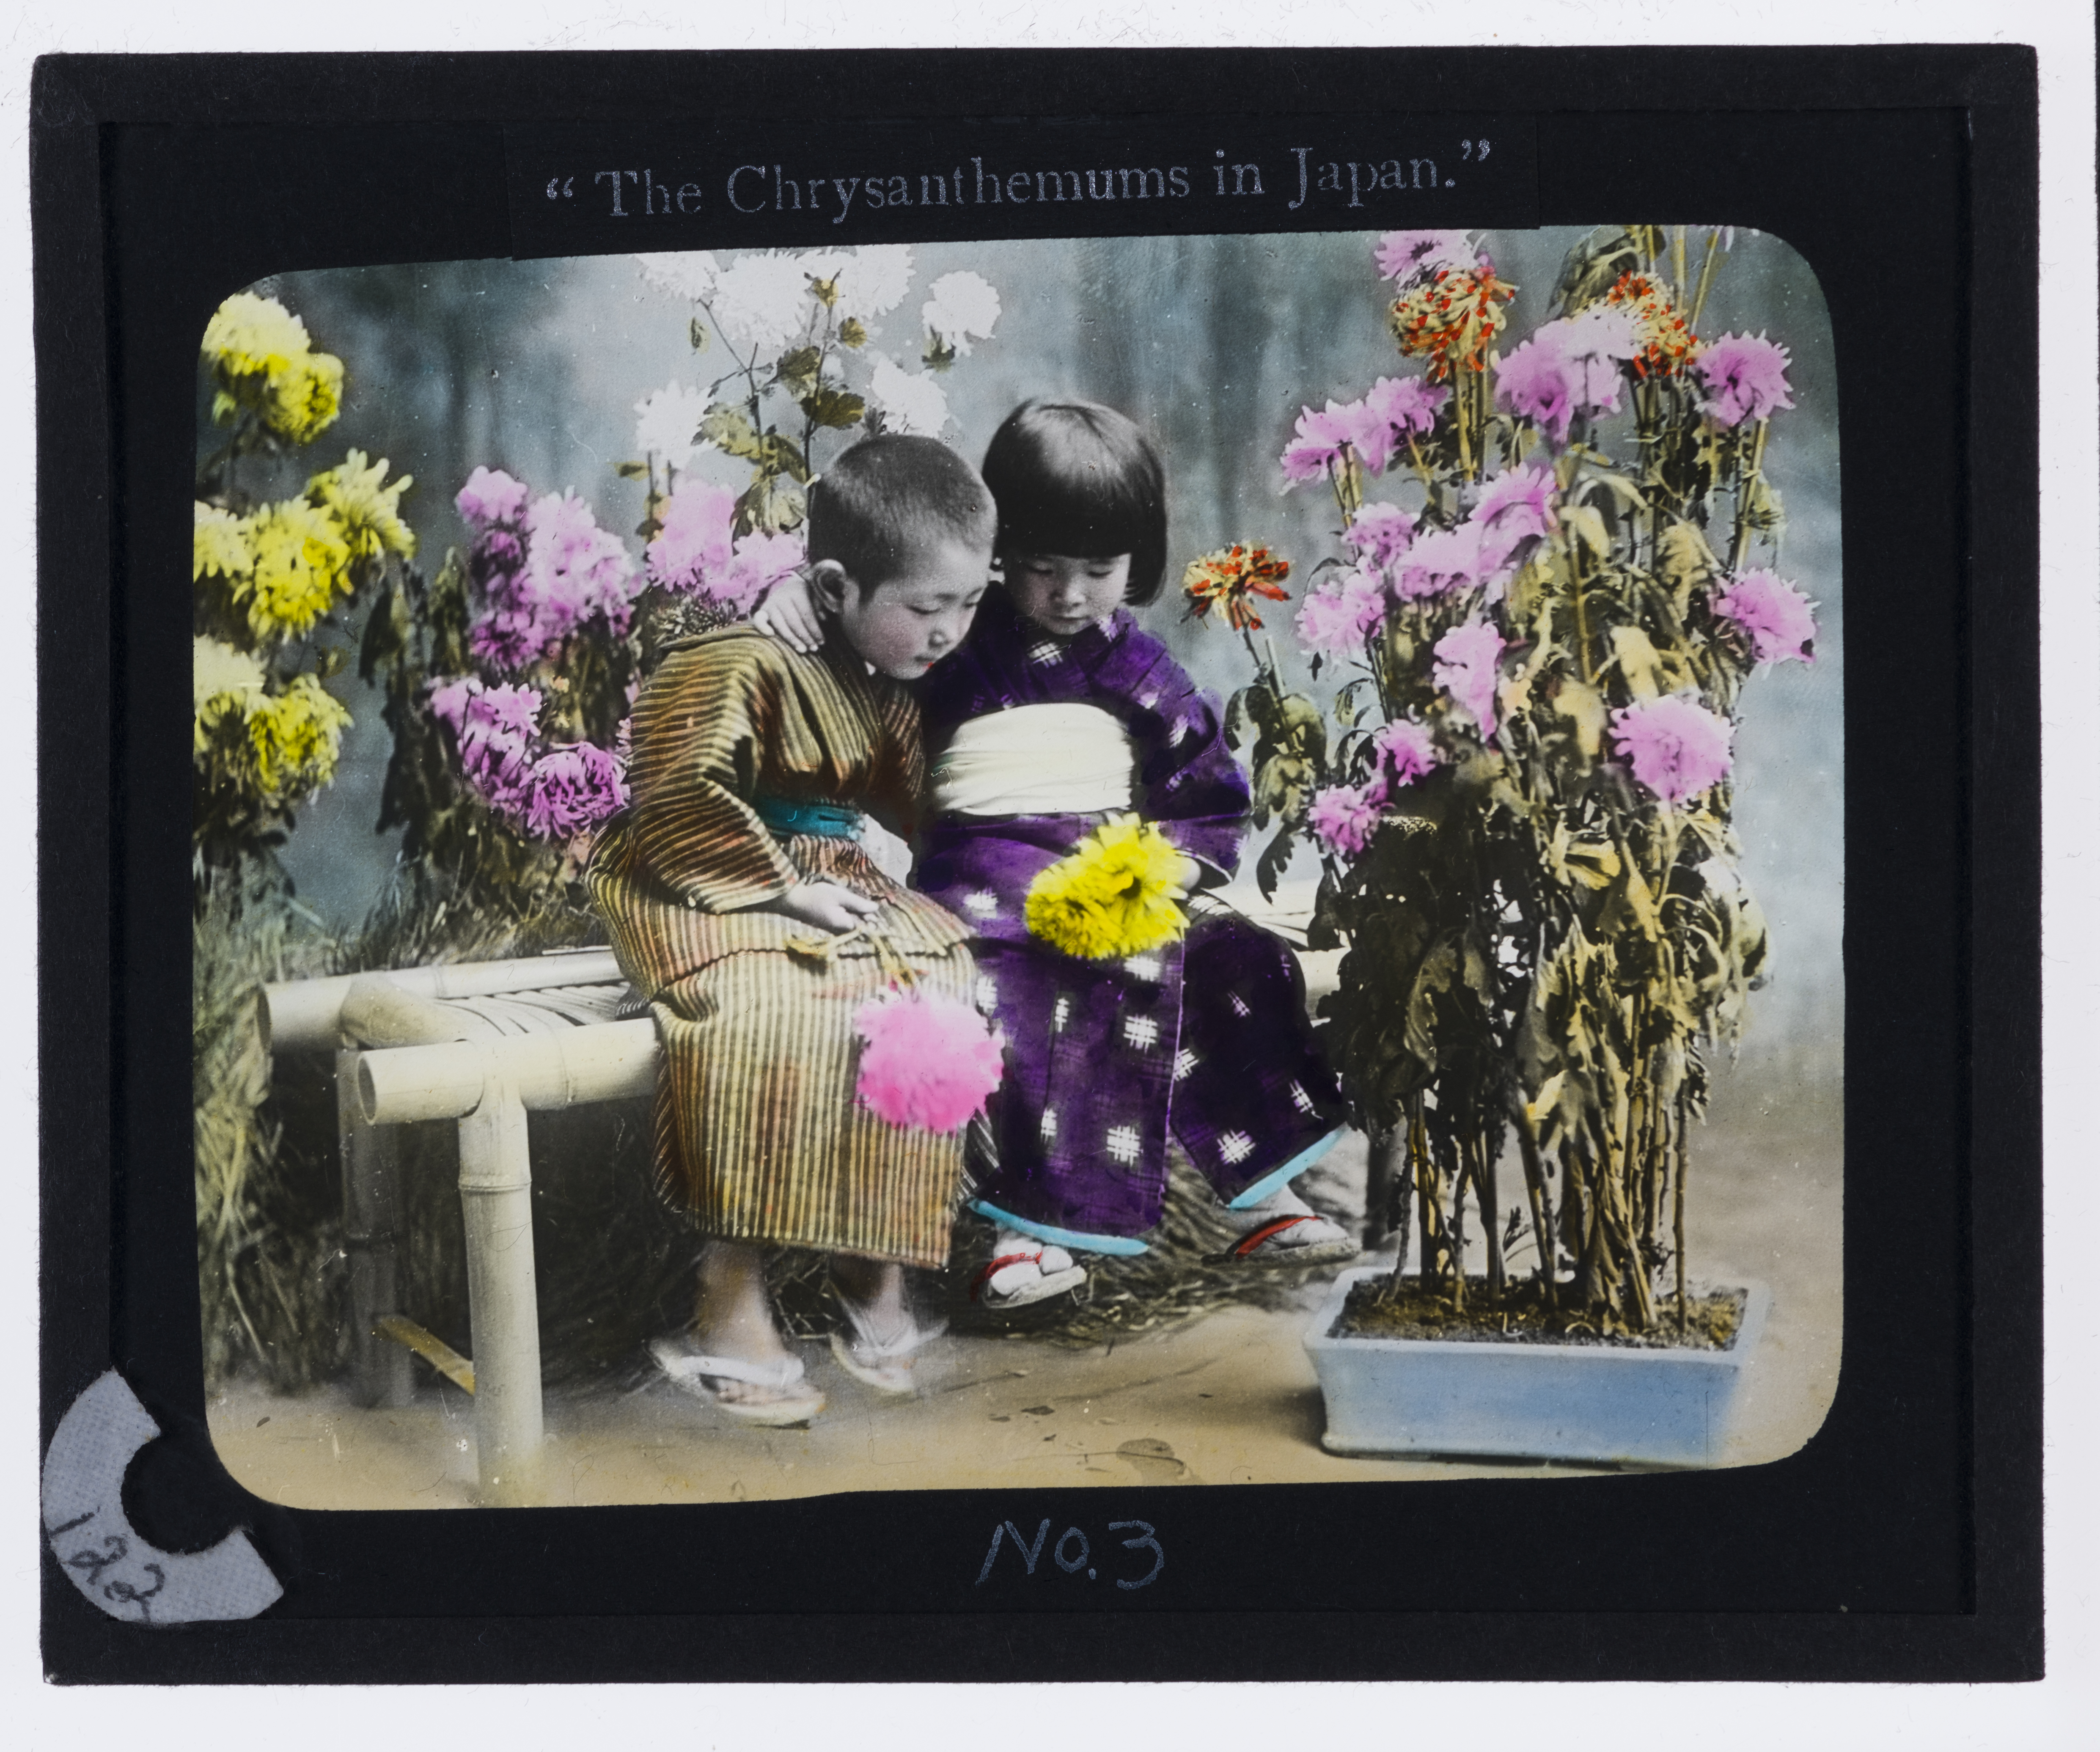 Children and chrysanthemums